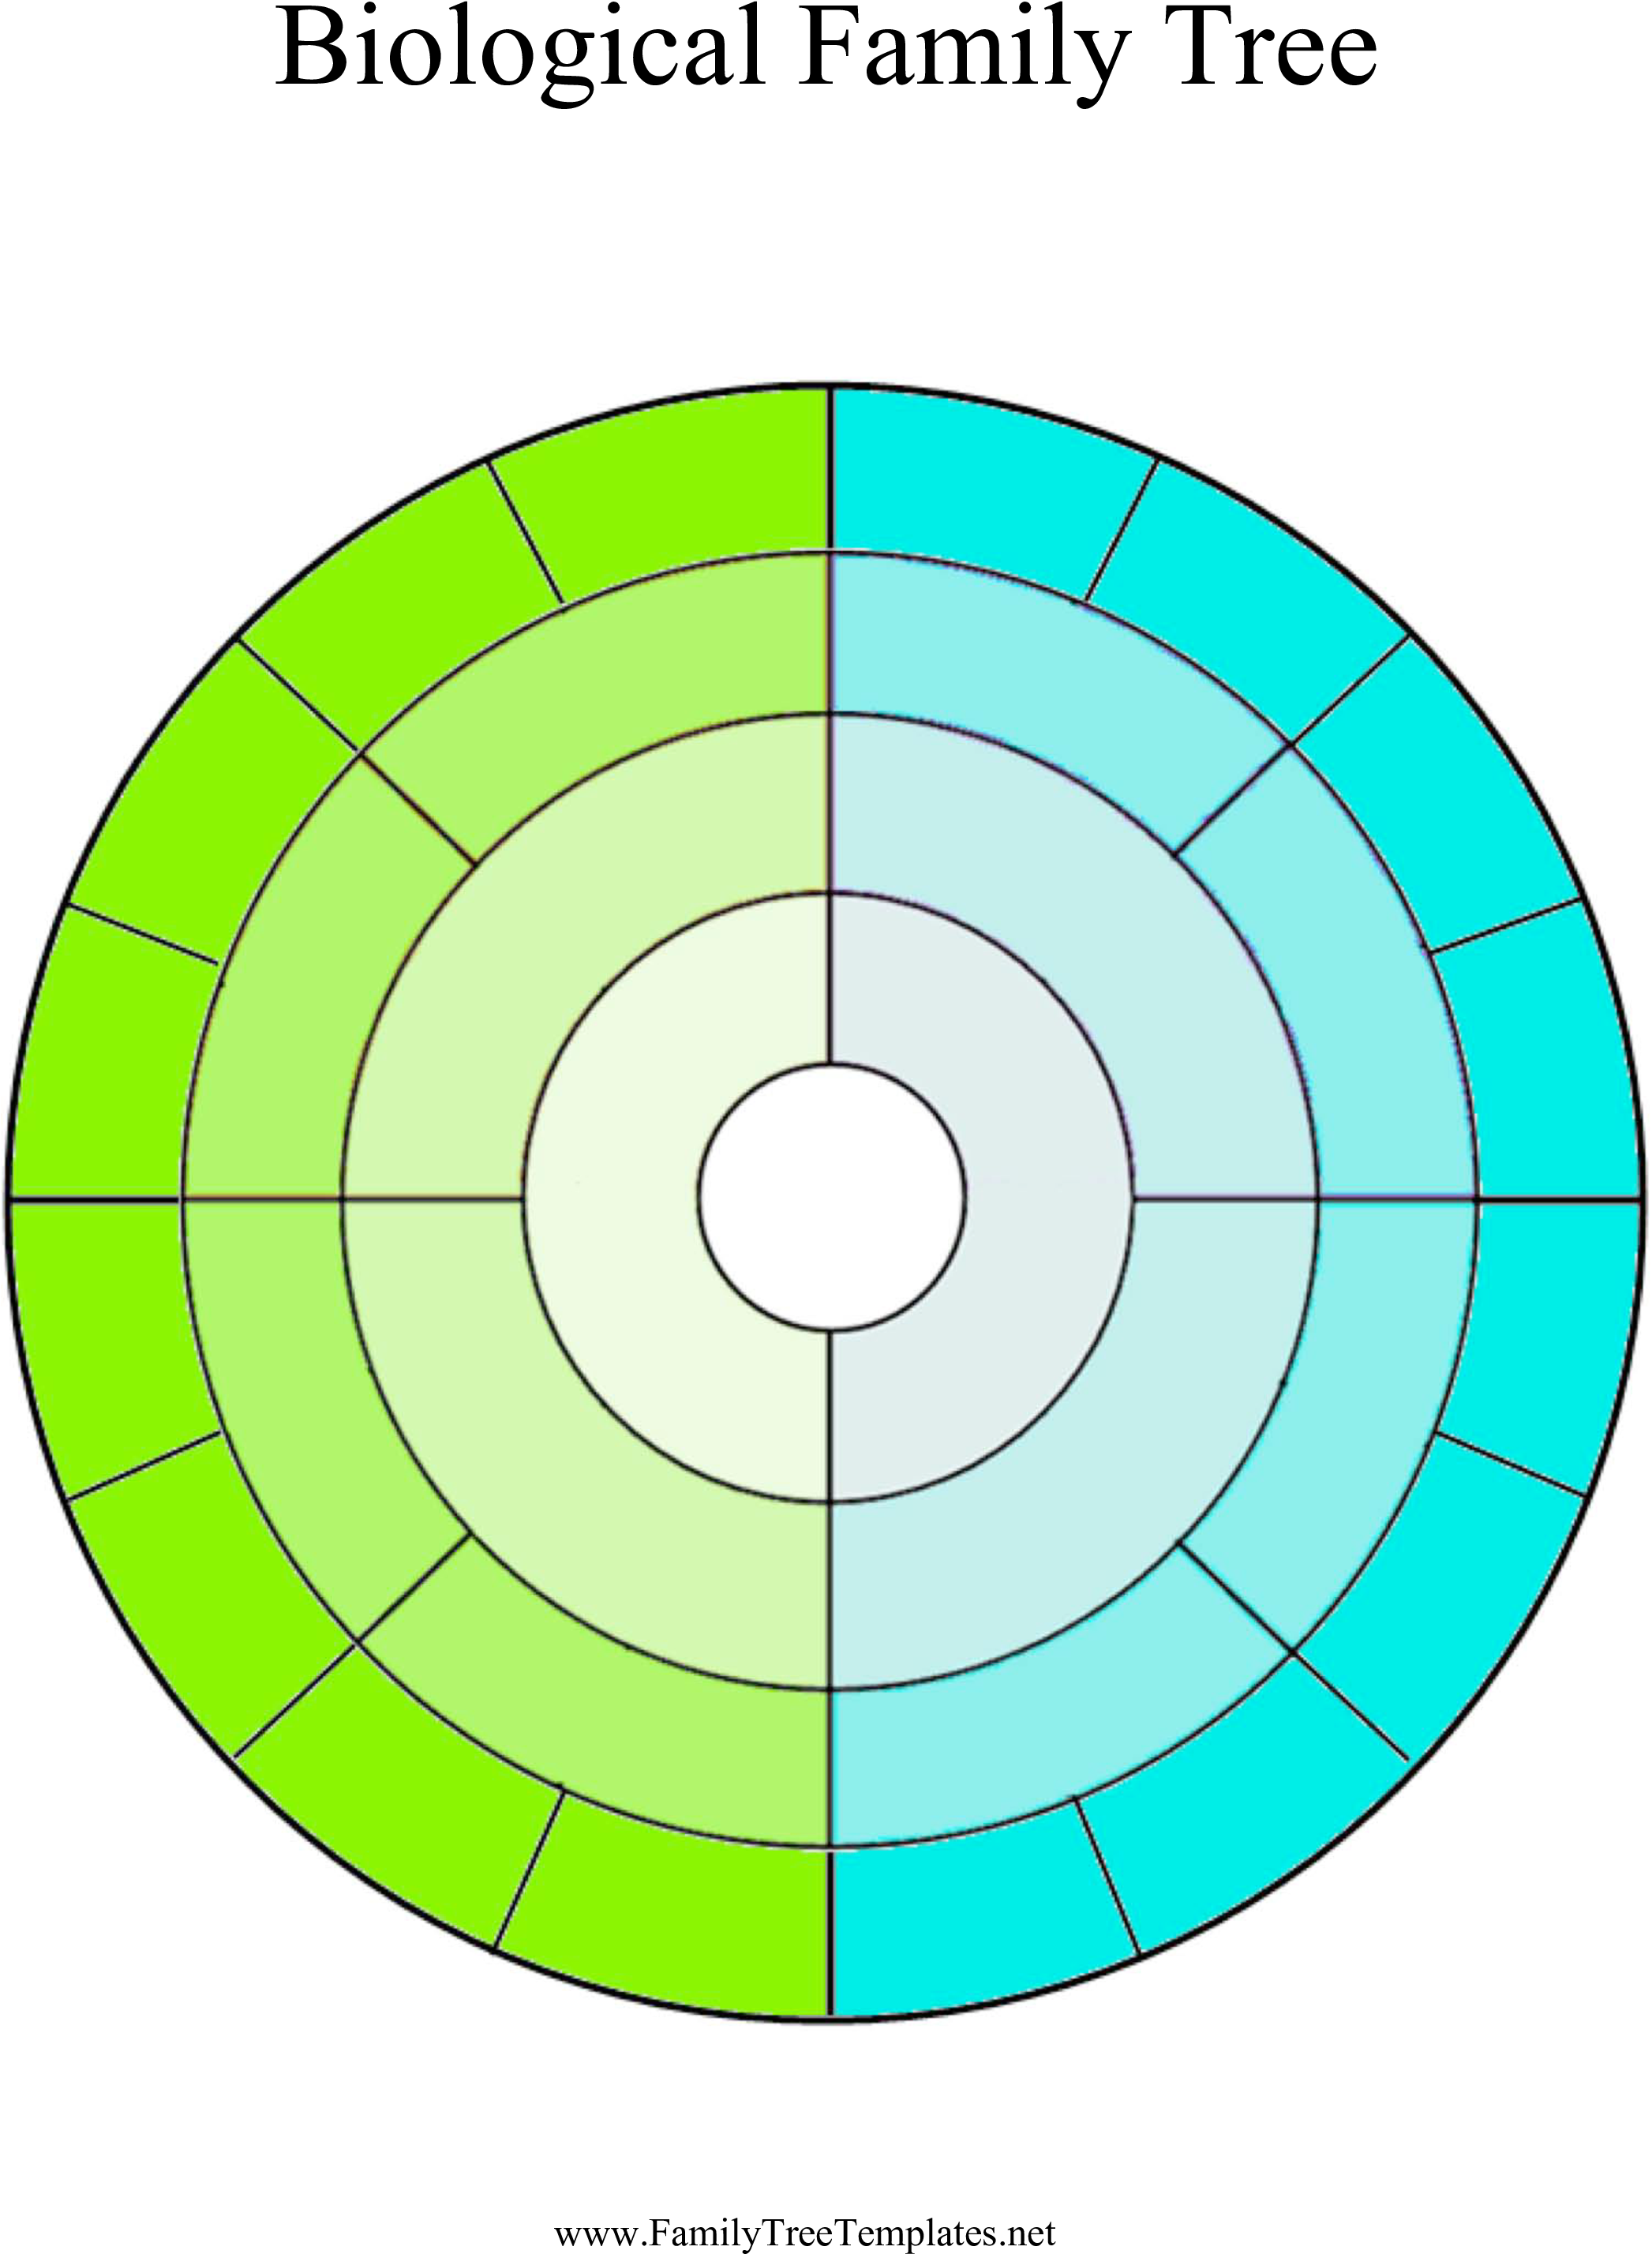 Circular Family Tree Main Image - Circle Family Tree Template (2550x3300)